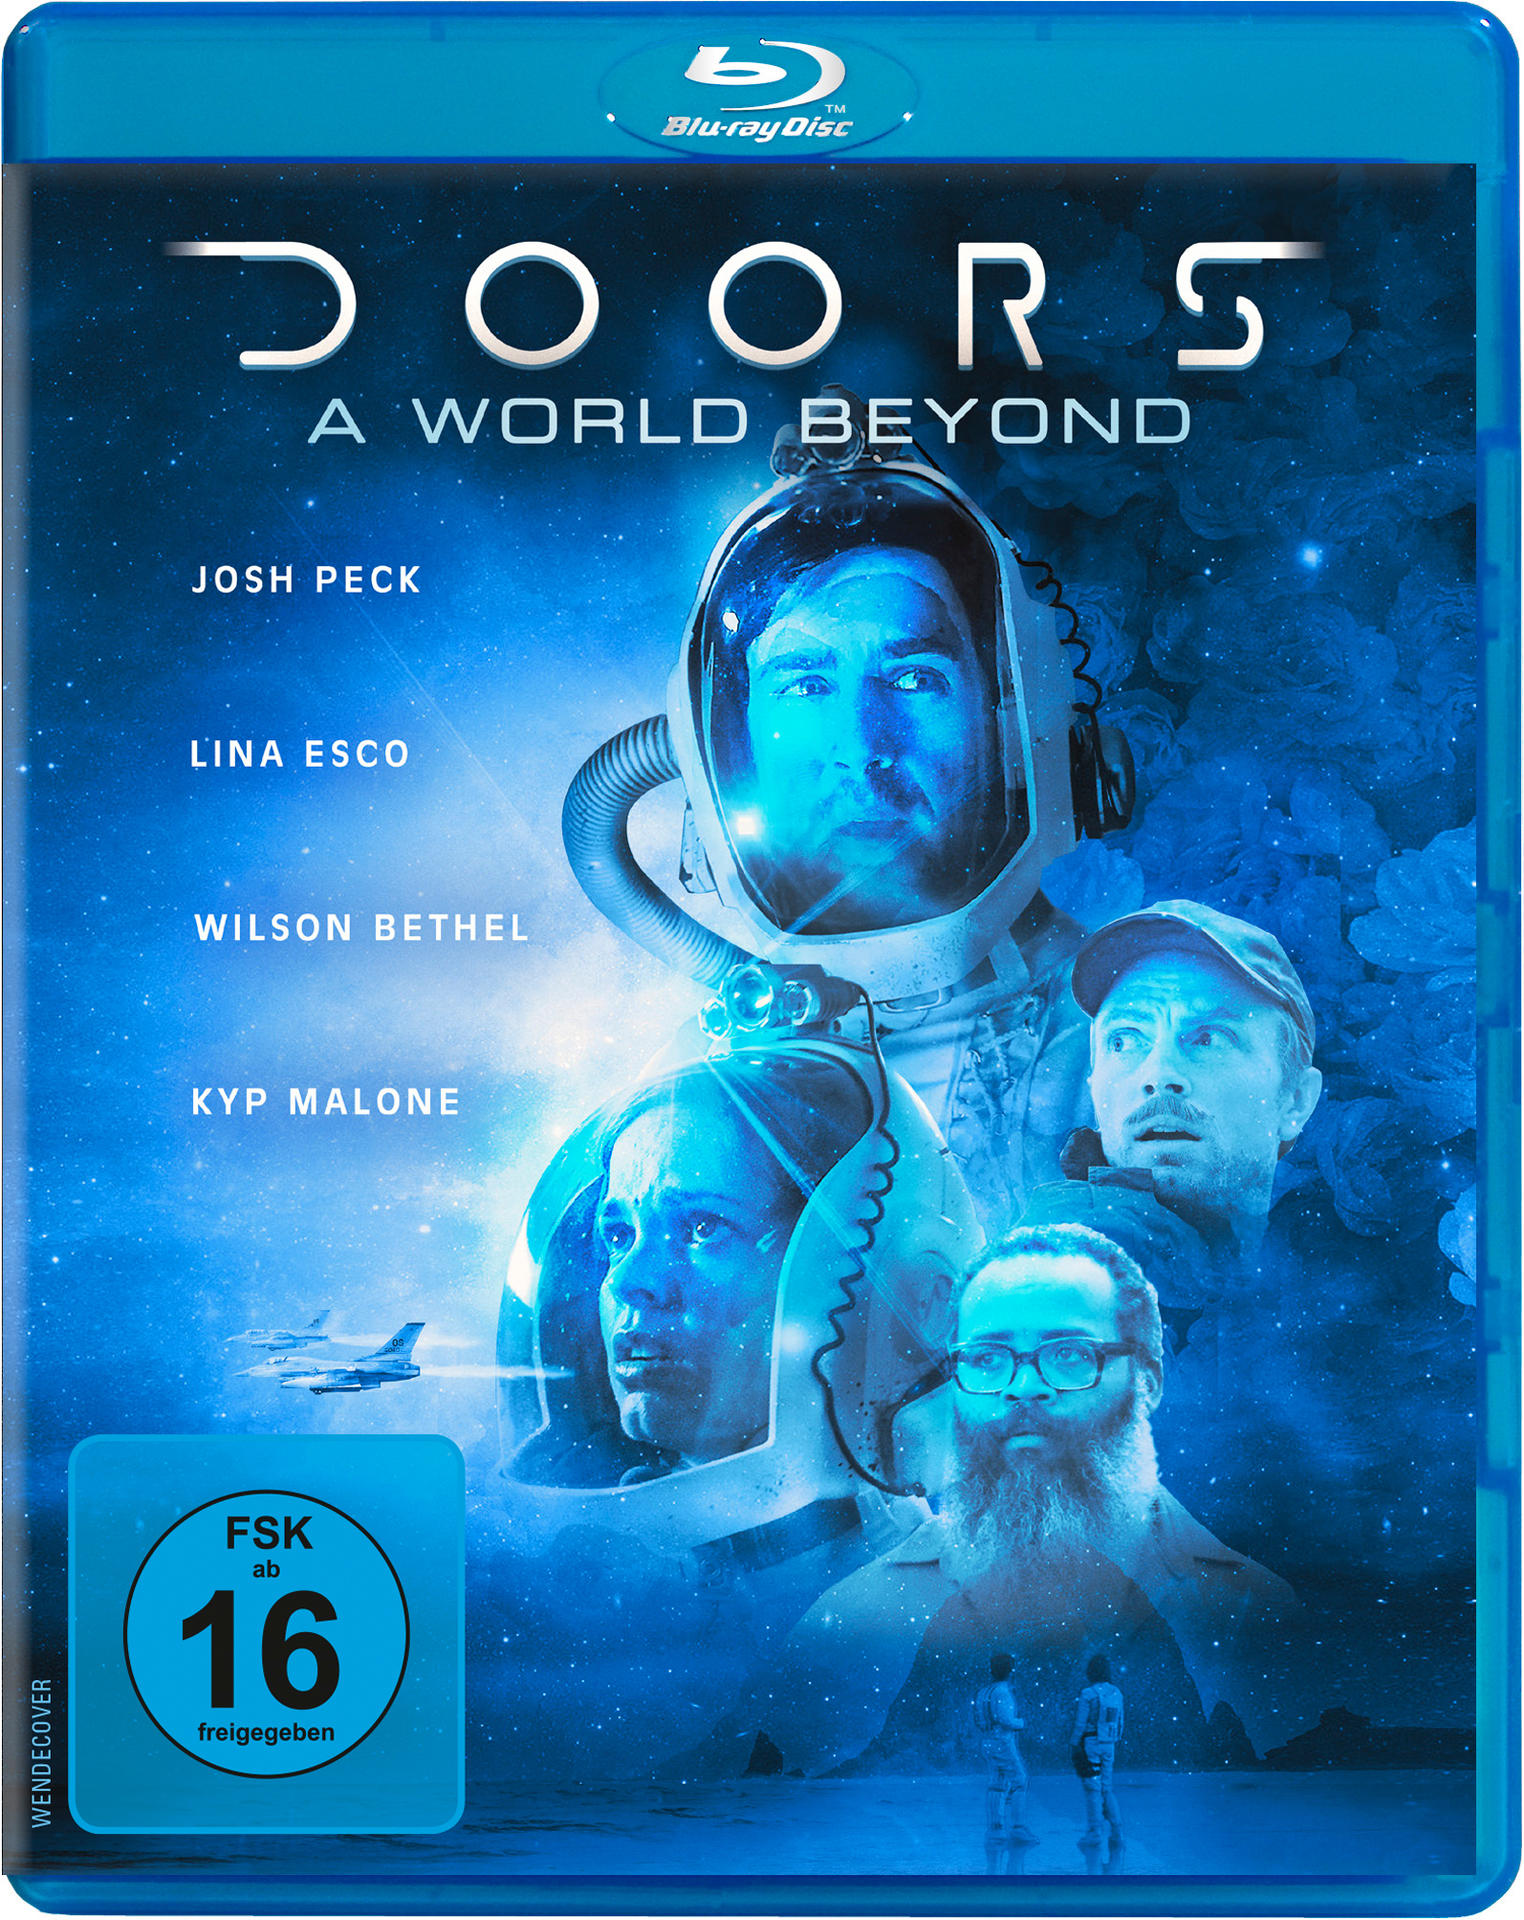 World A Beyond - Doors Blu-ray